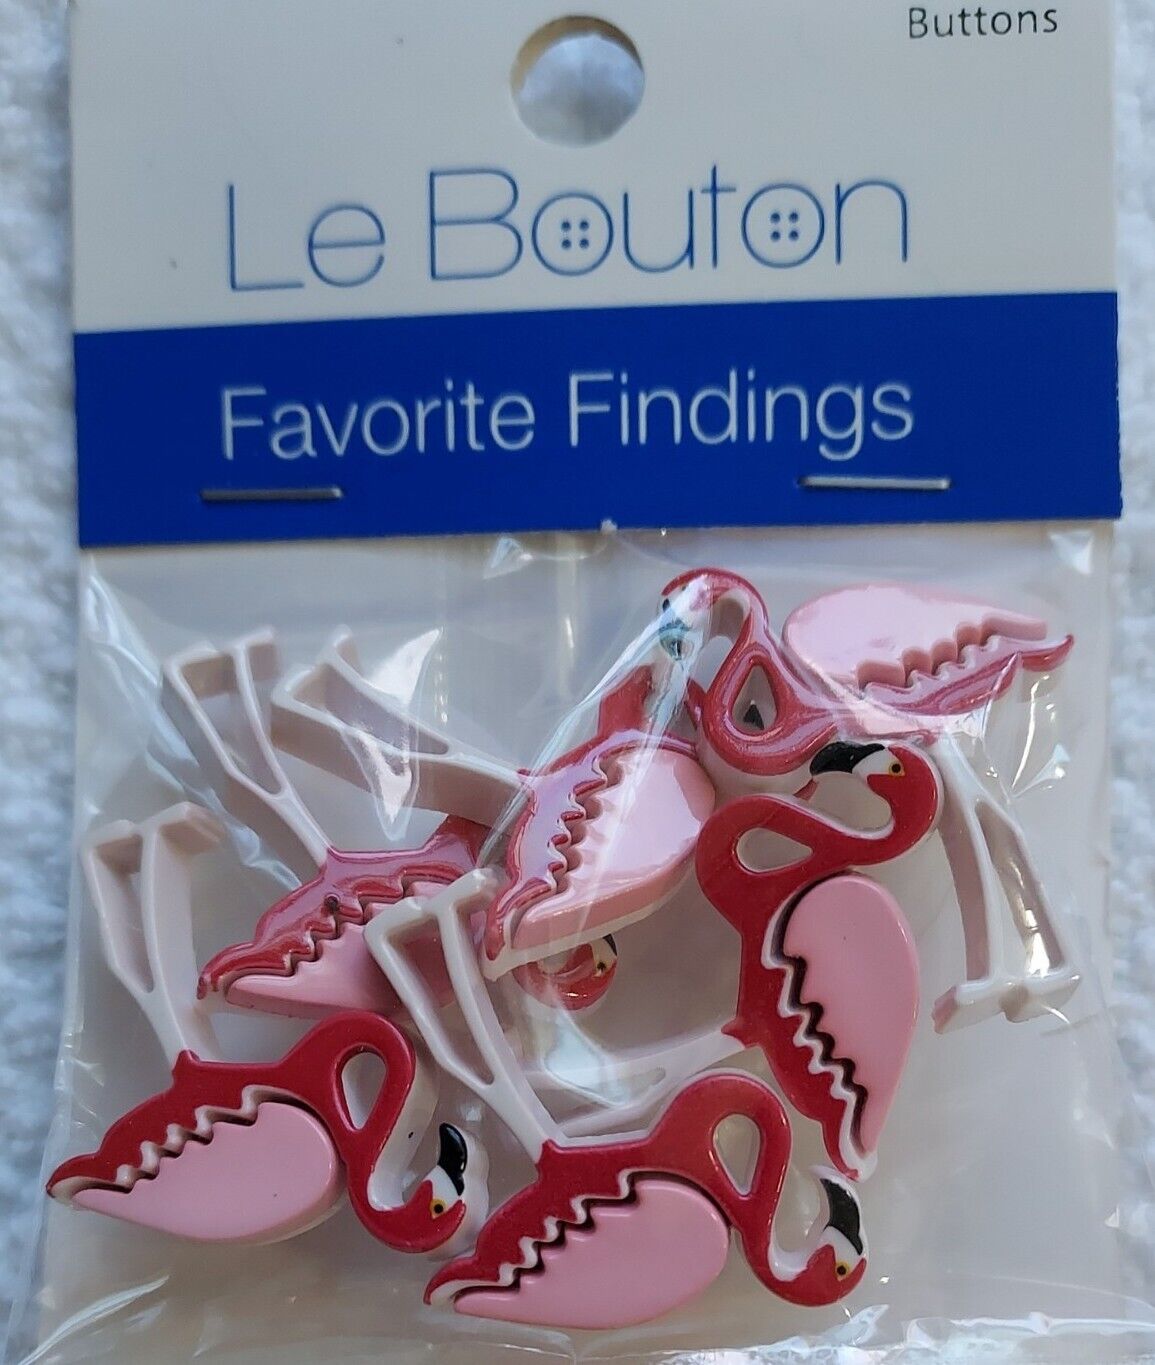 Le Bouton Buttons Flamingo's Favorite Findings